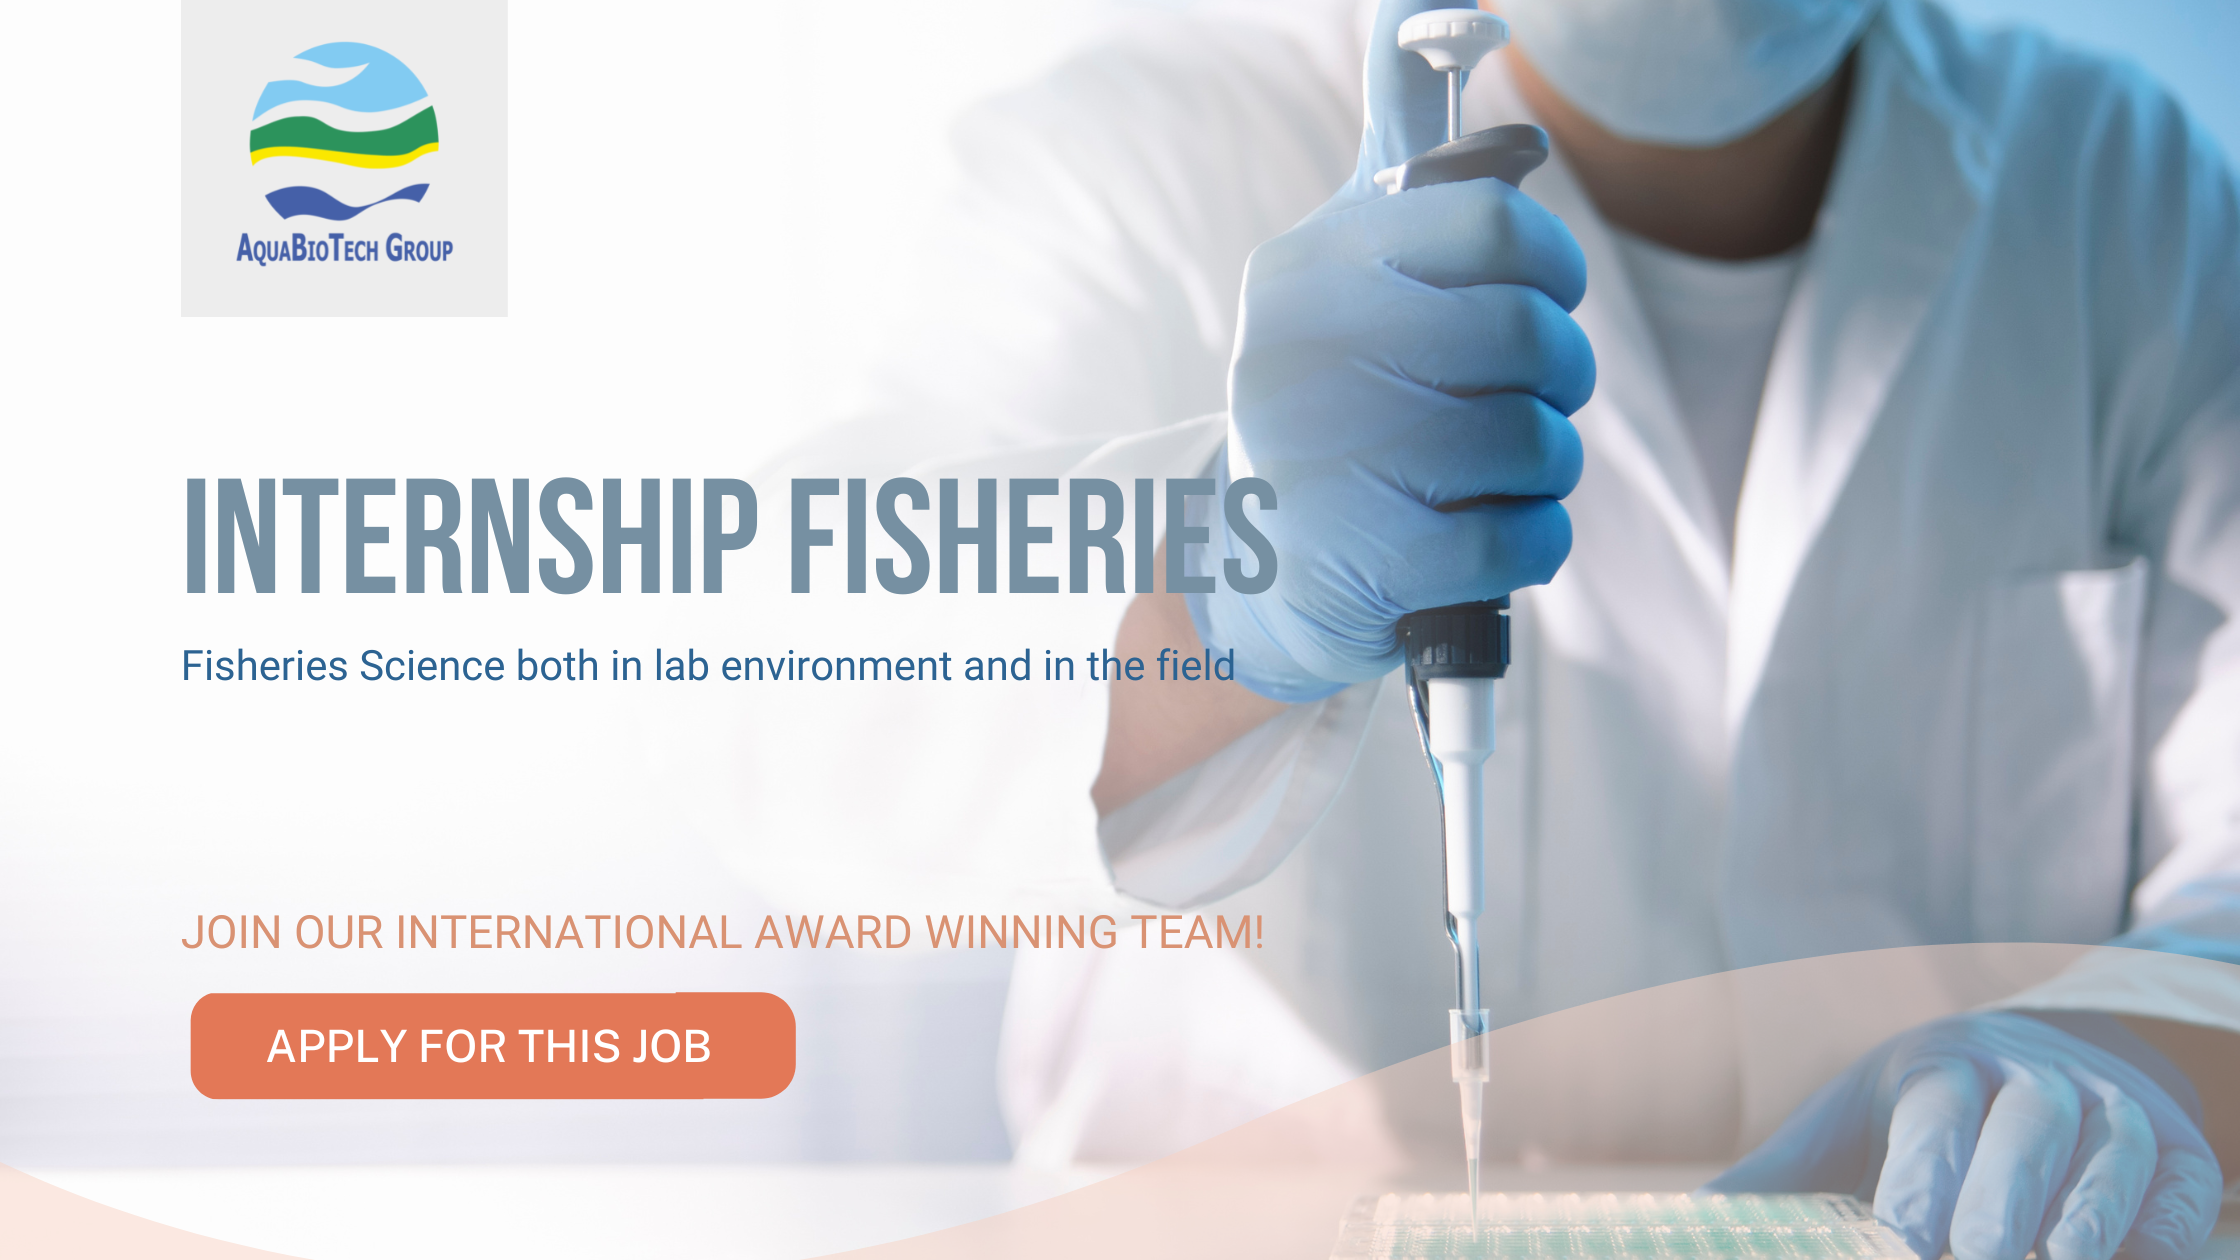 Internship Fisheries AquaBioTech Group